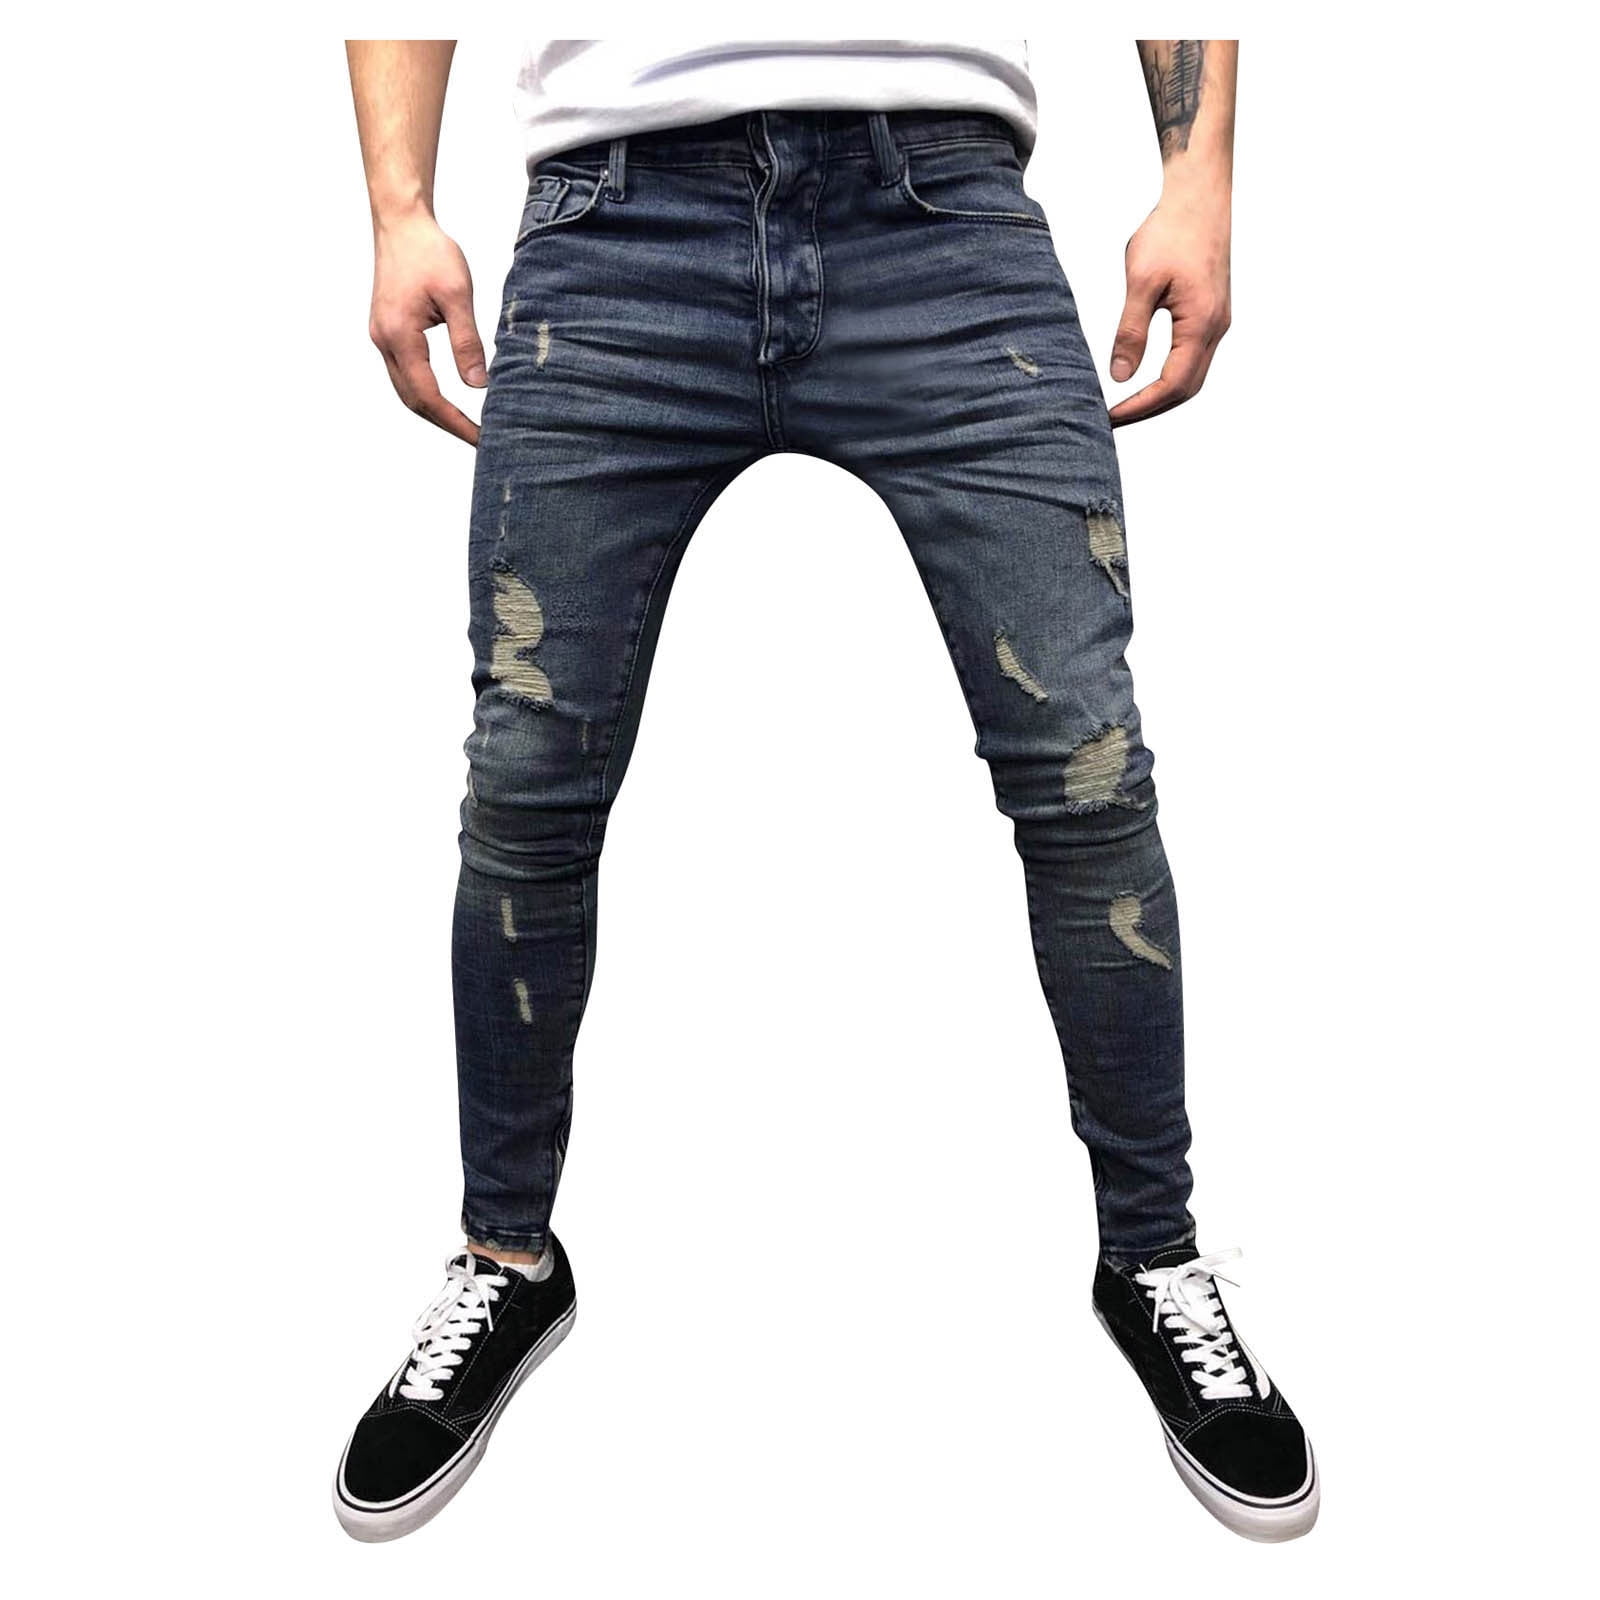 DDAPJ pyju Jeans for Men Skinny High Performance Stretchy Jeans ...